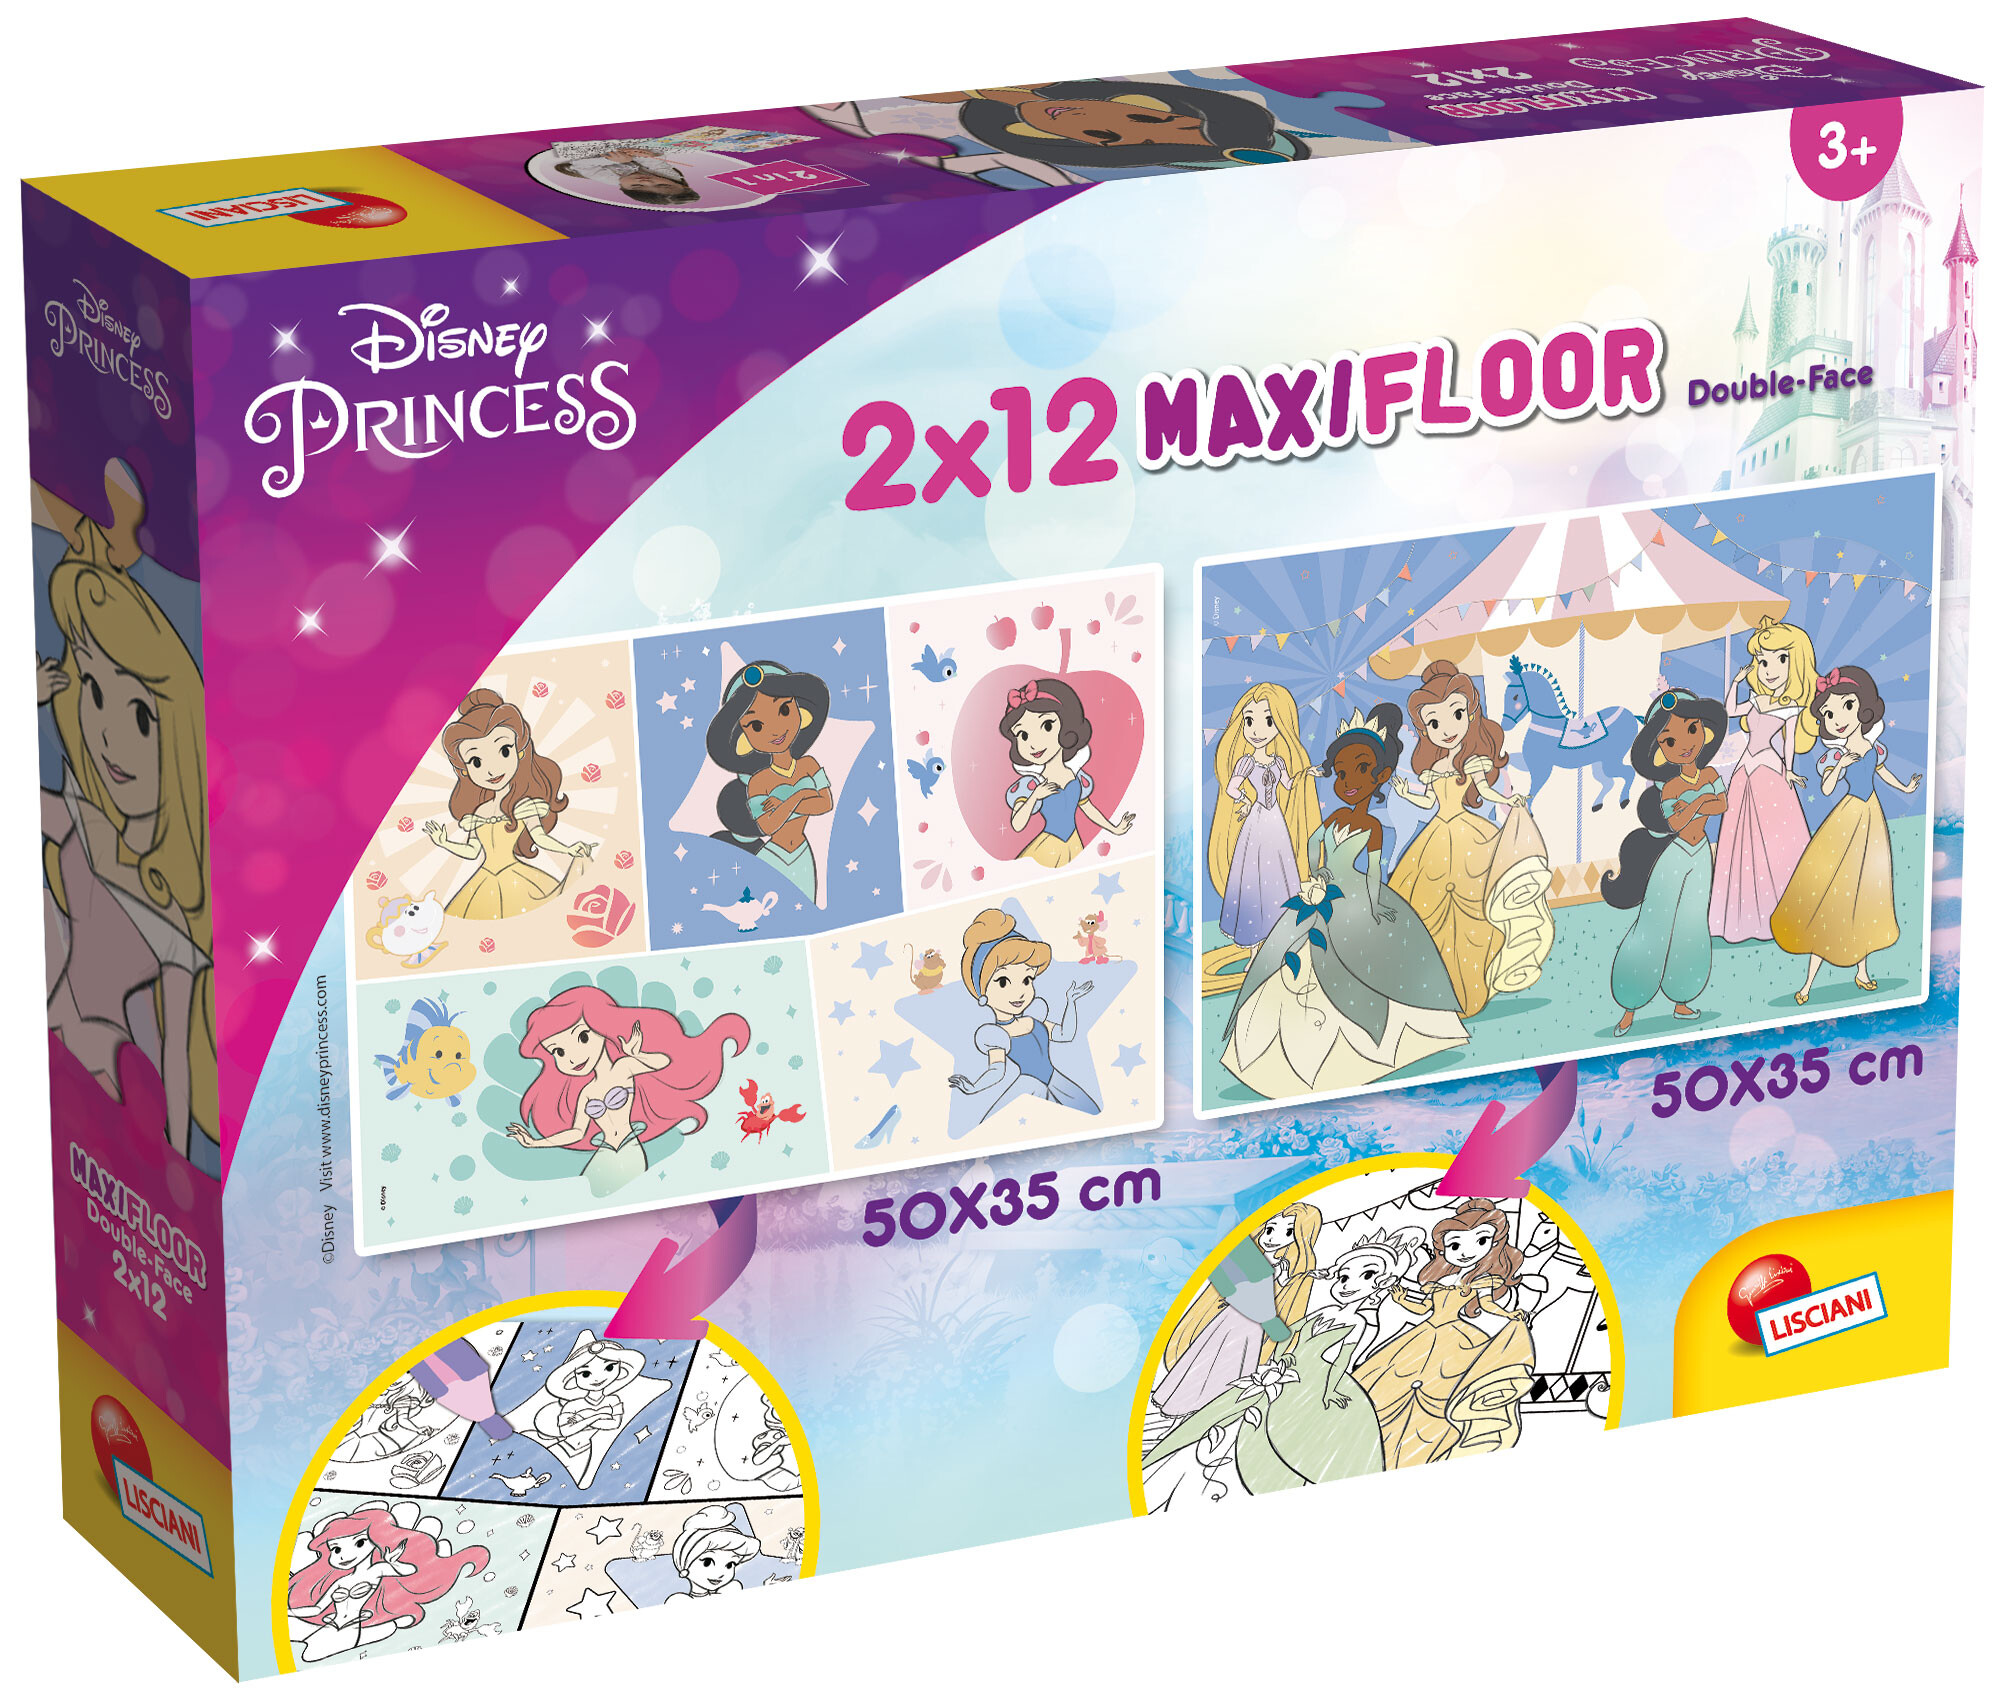 Disney puzzle maxifloor 2 x 12 princess - DISNEY PRINCESS, LISCIANI